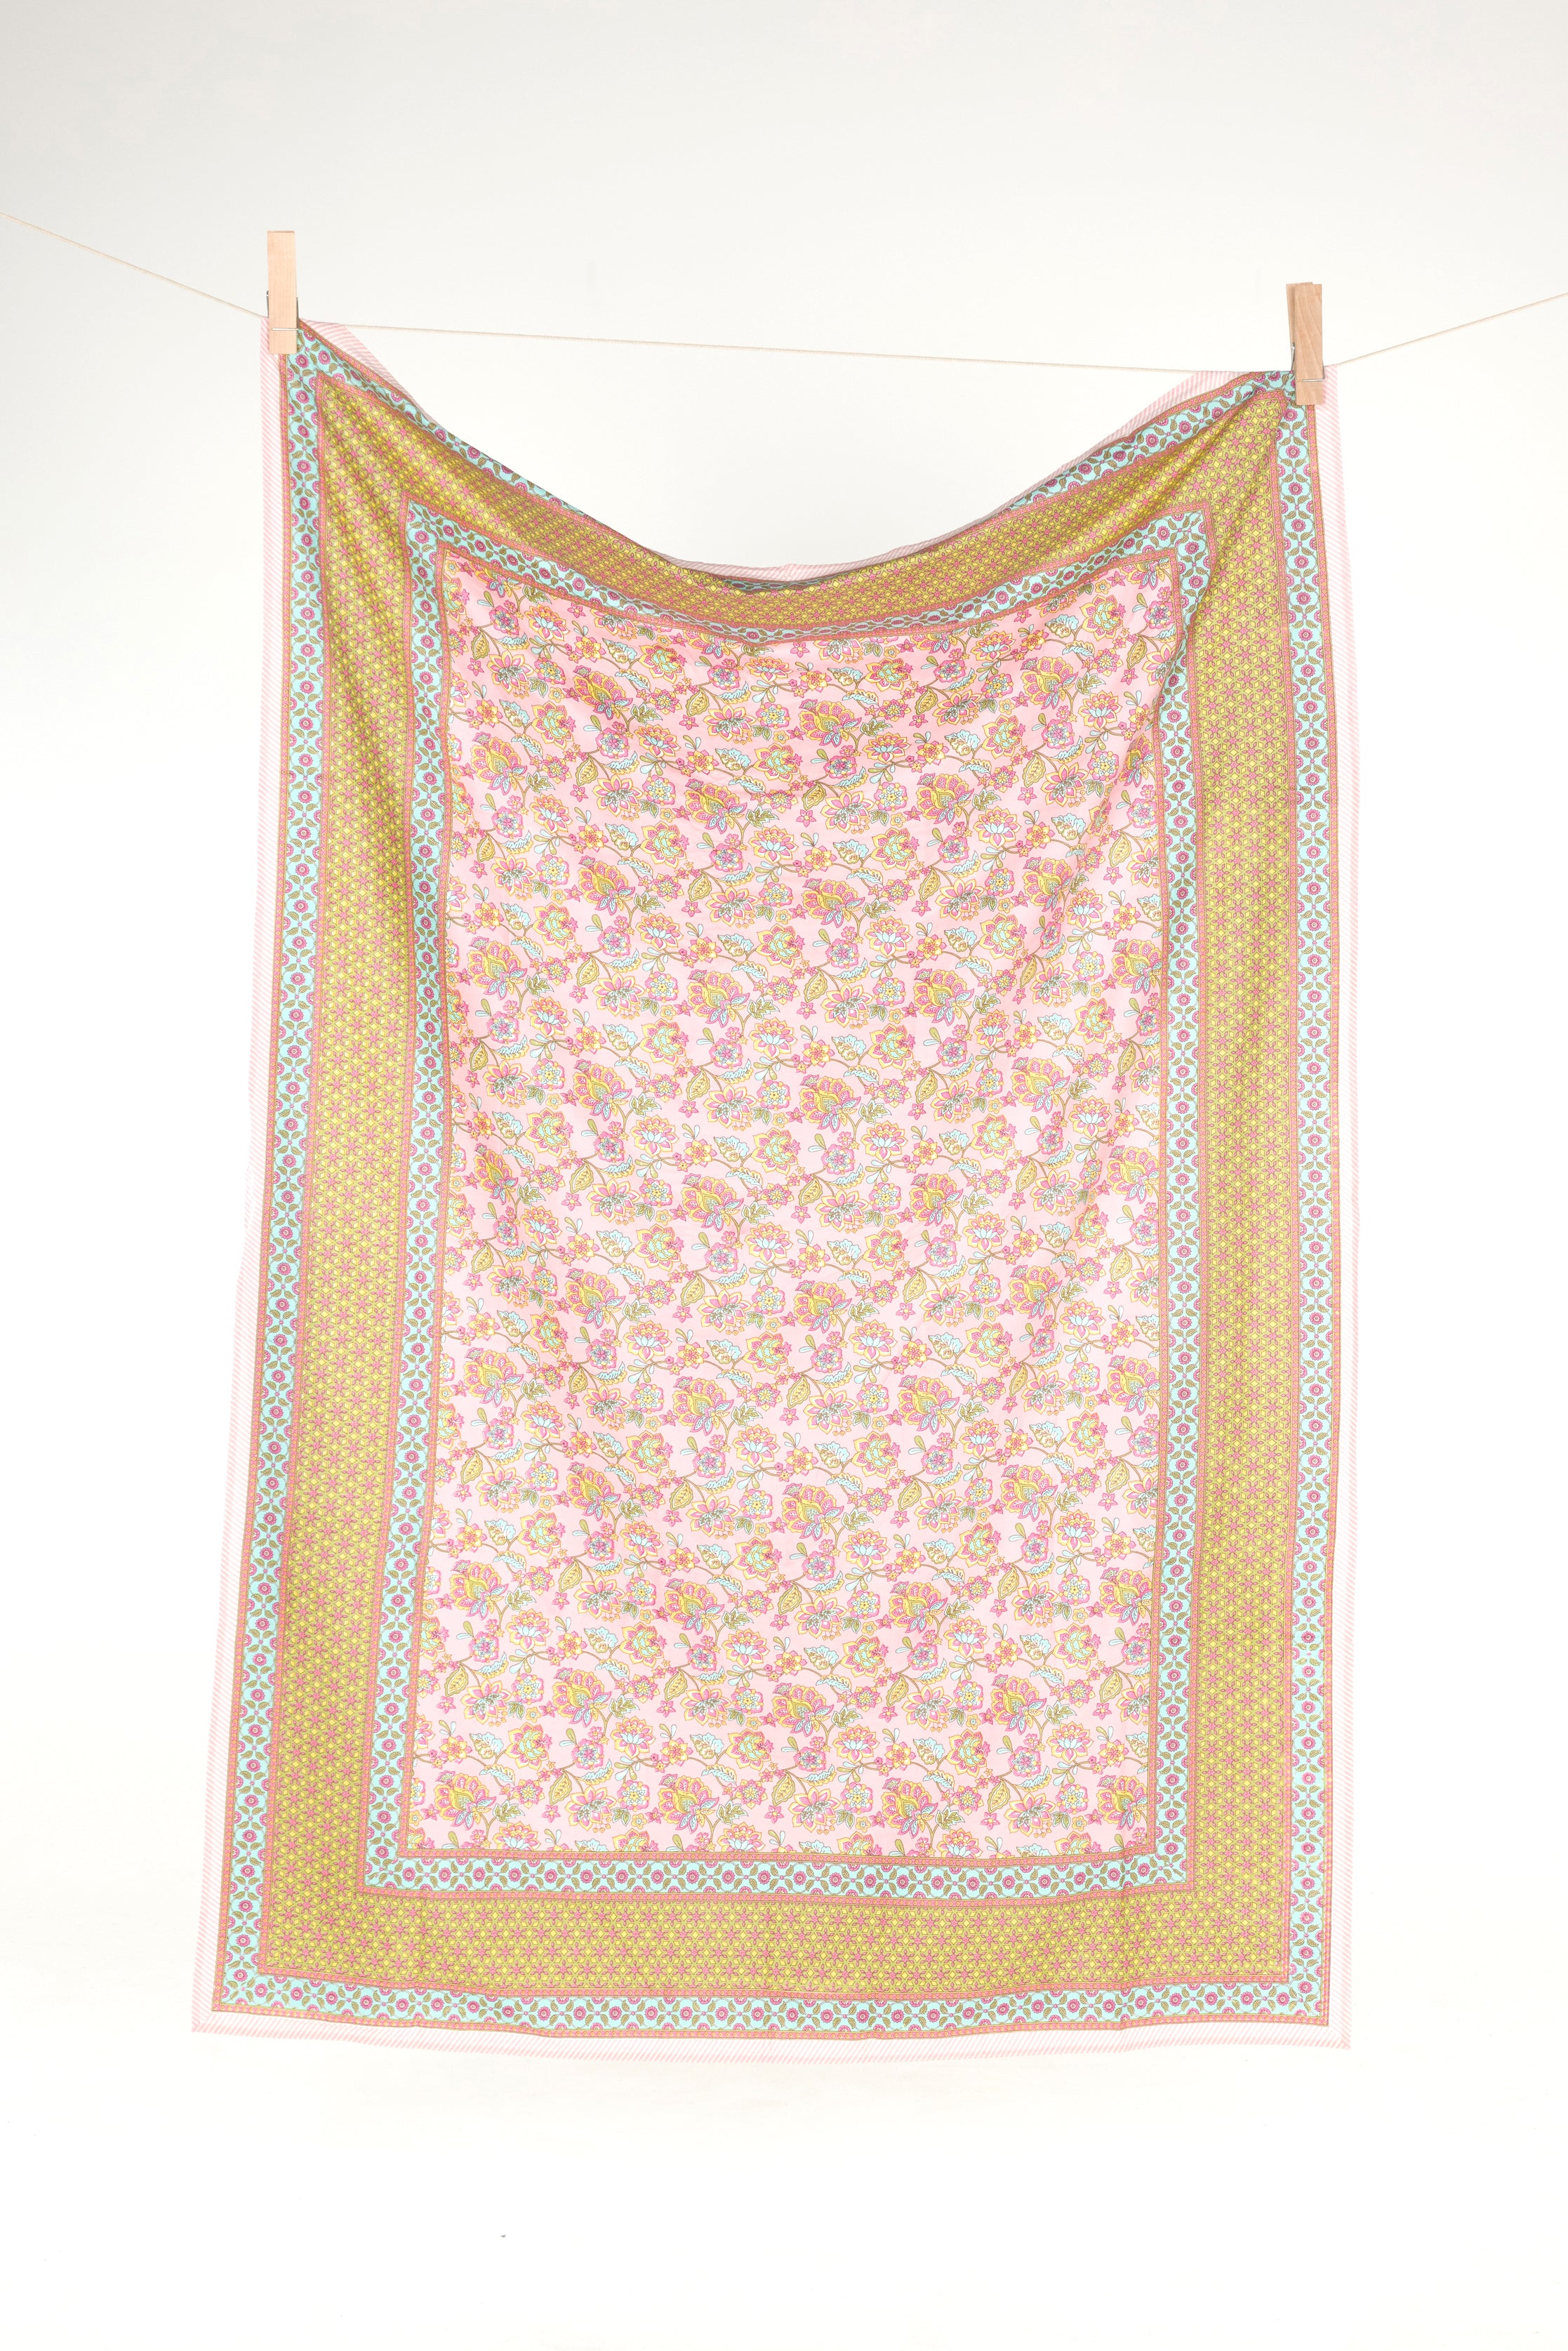 Block Print Cotton Tablecloth -  Floral Multi